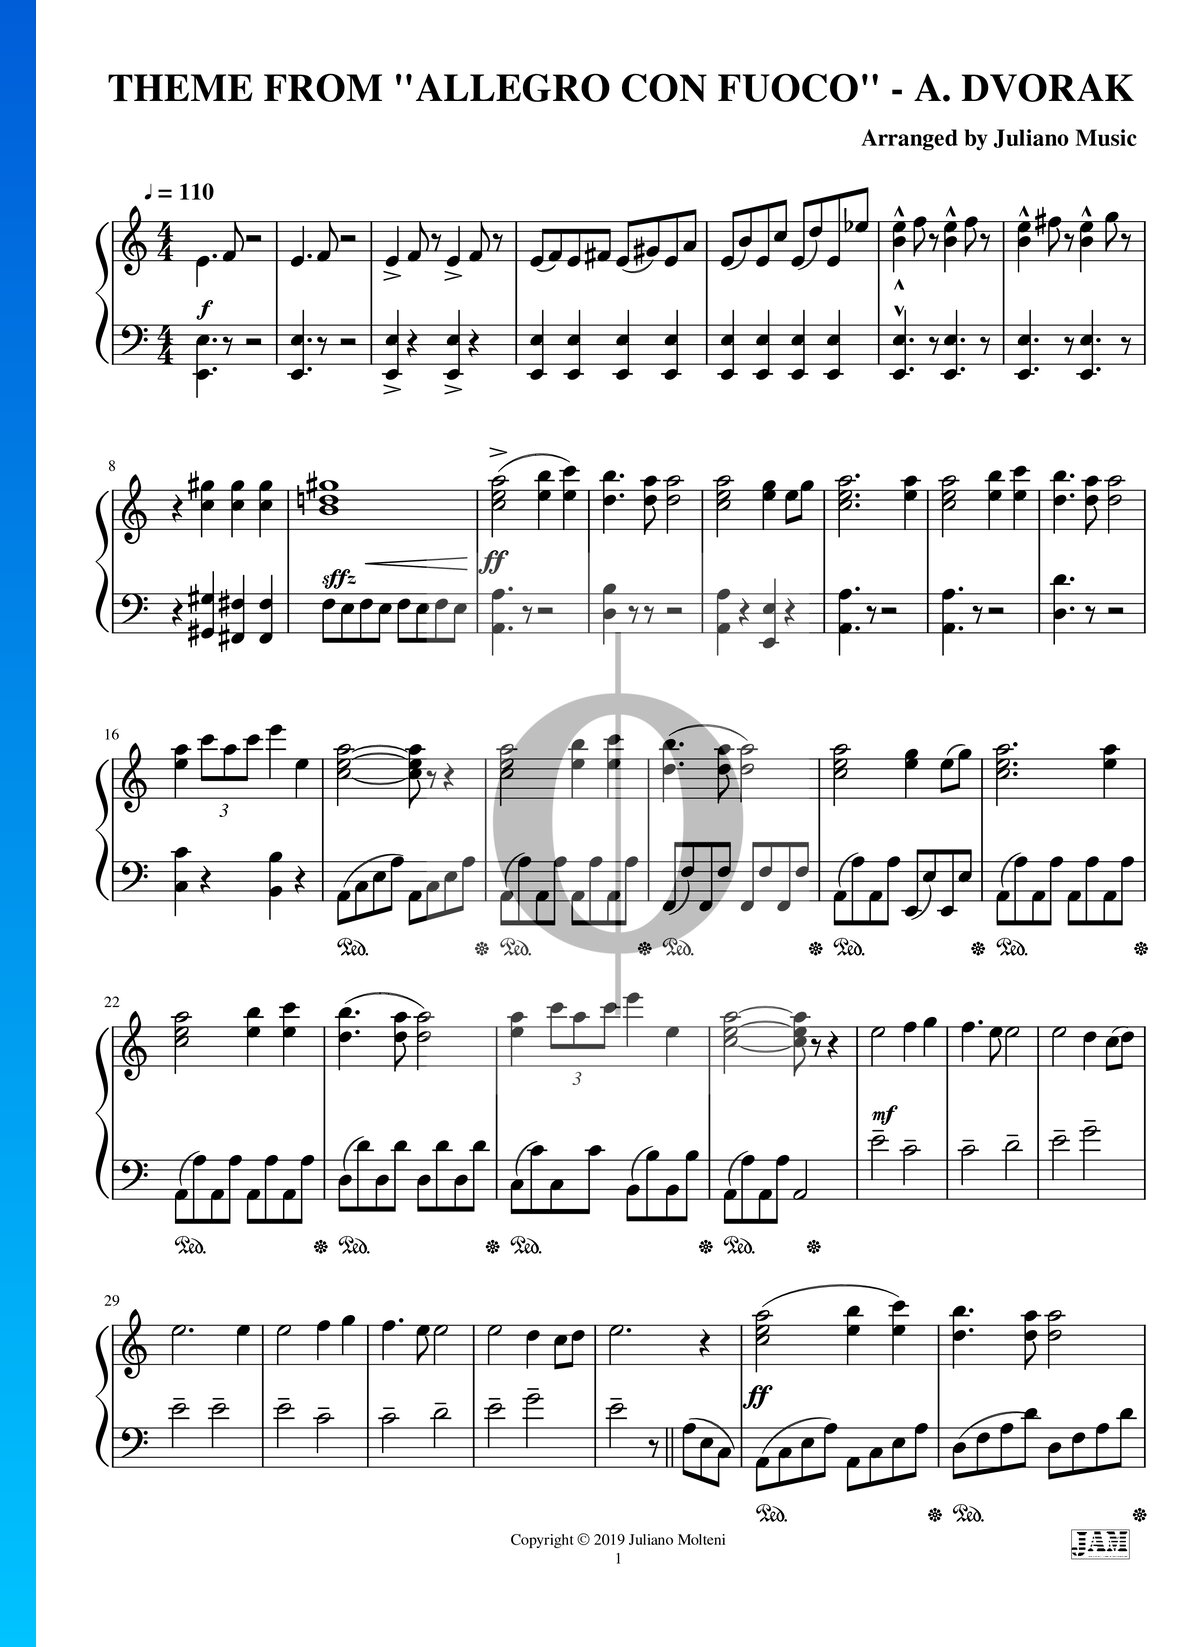 Die Geisterbraut op. 69 (Antonín Dvorák) » Partitions pour chœur mixte